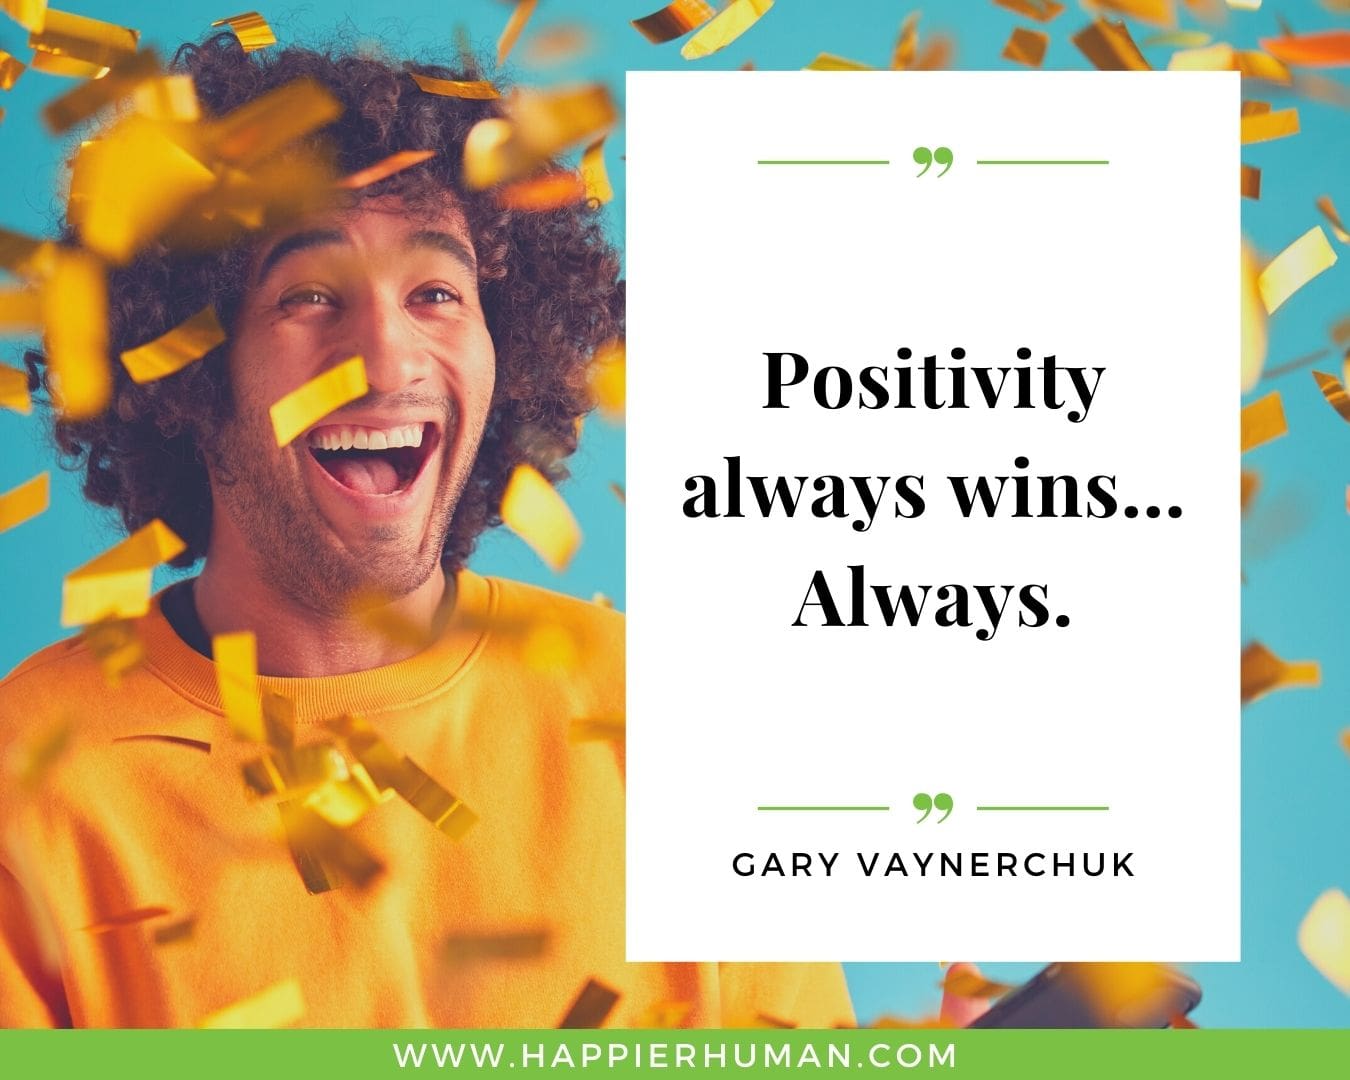 Positive Energy Quotes - “Positivity always wins…Always.” - Gary Vaynerchuk